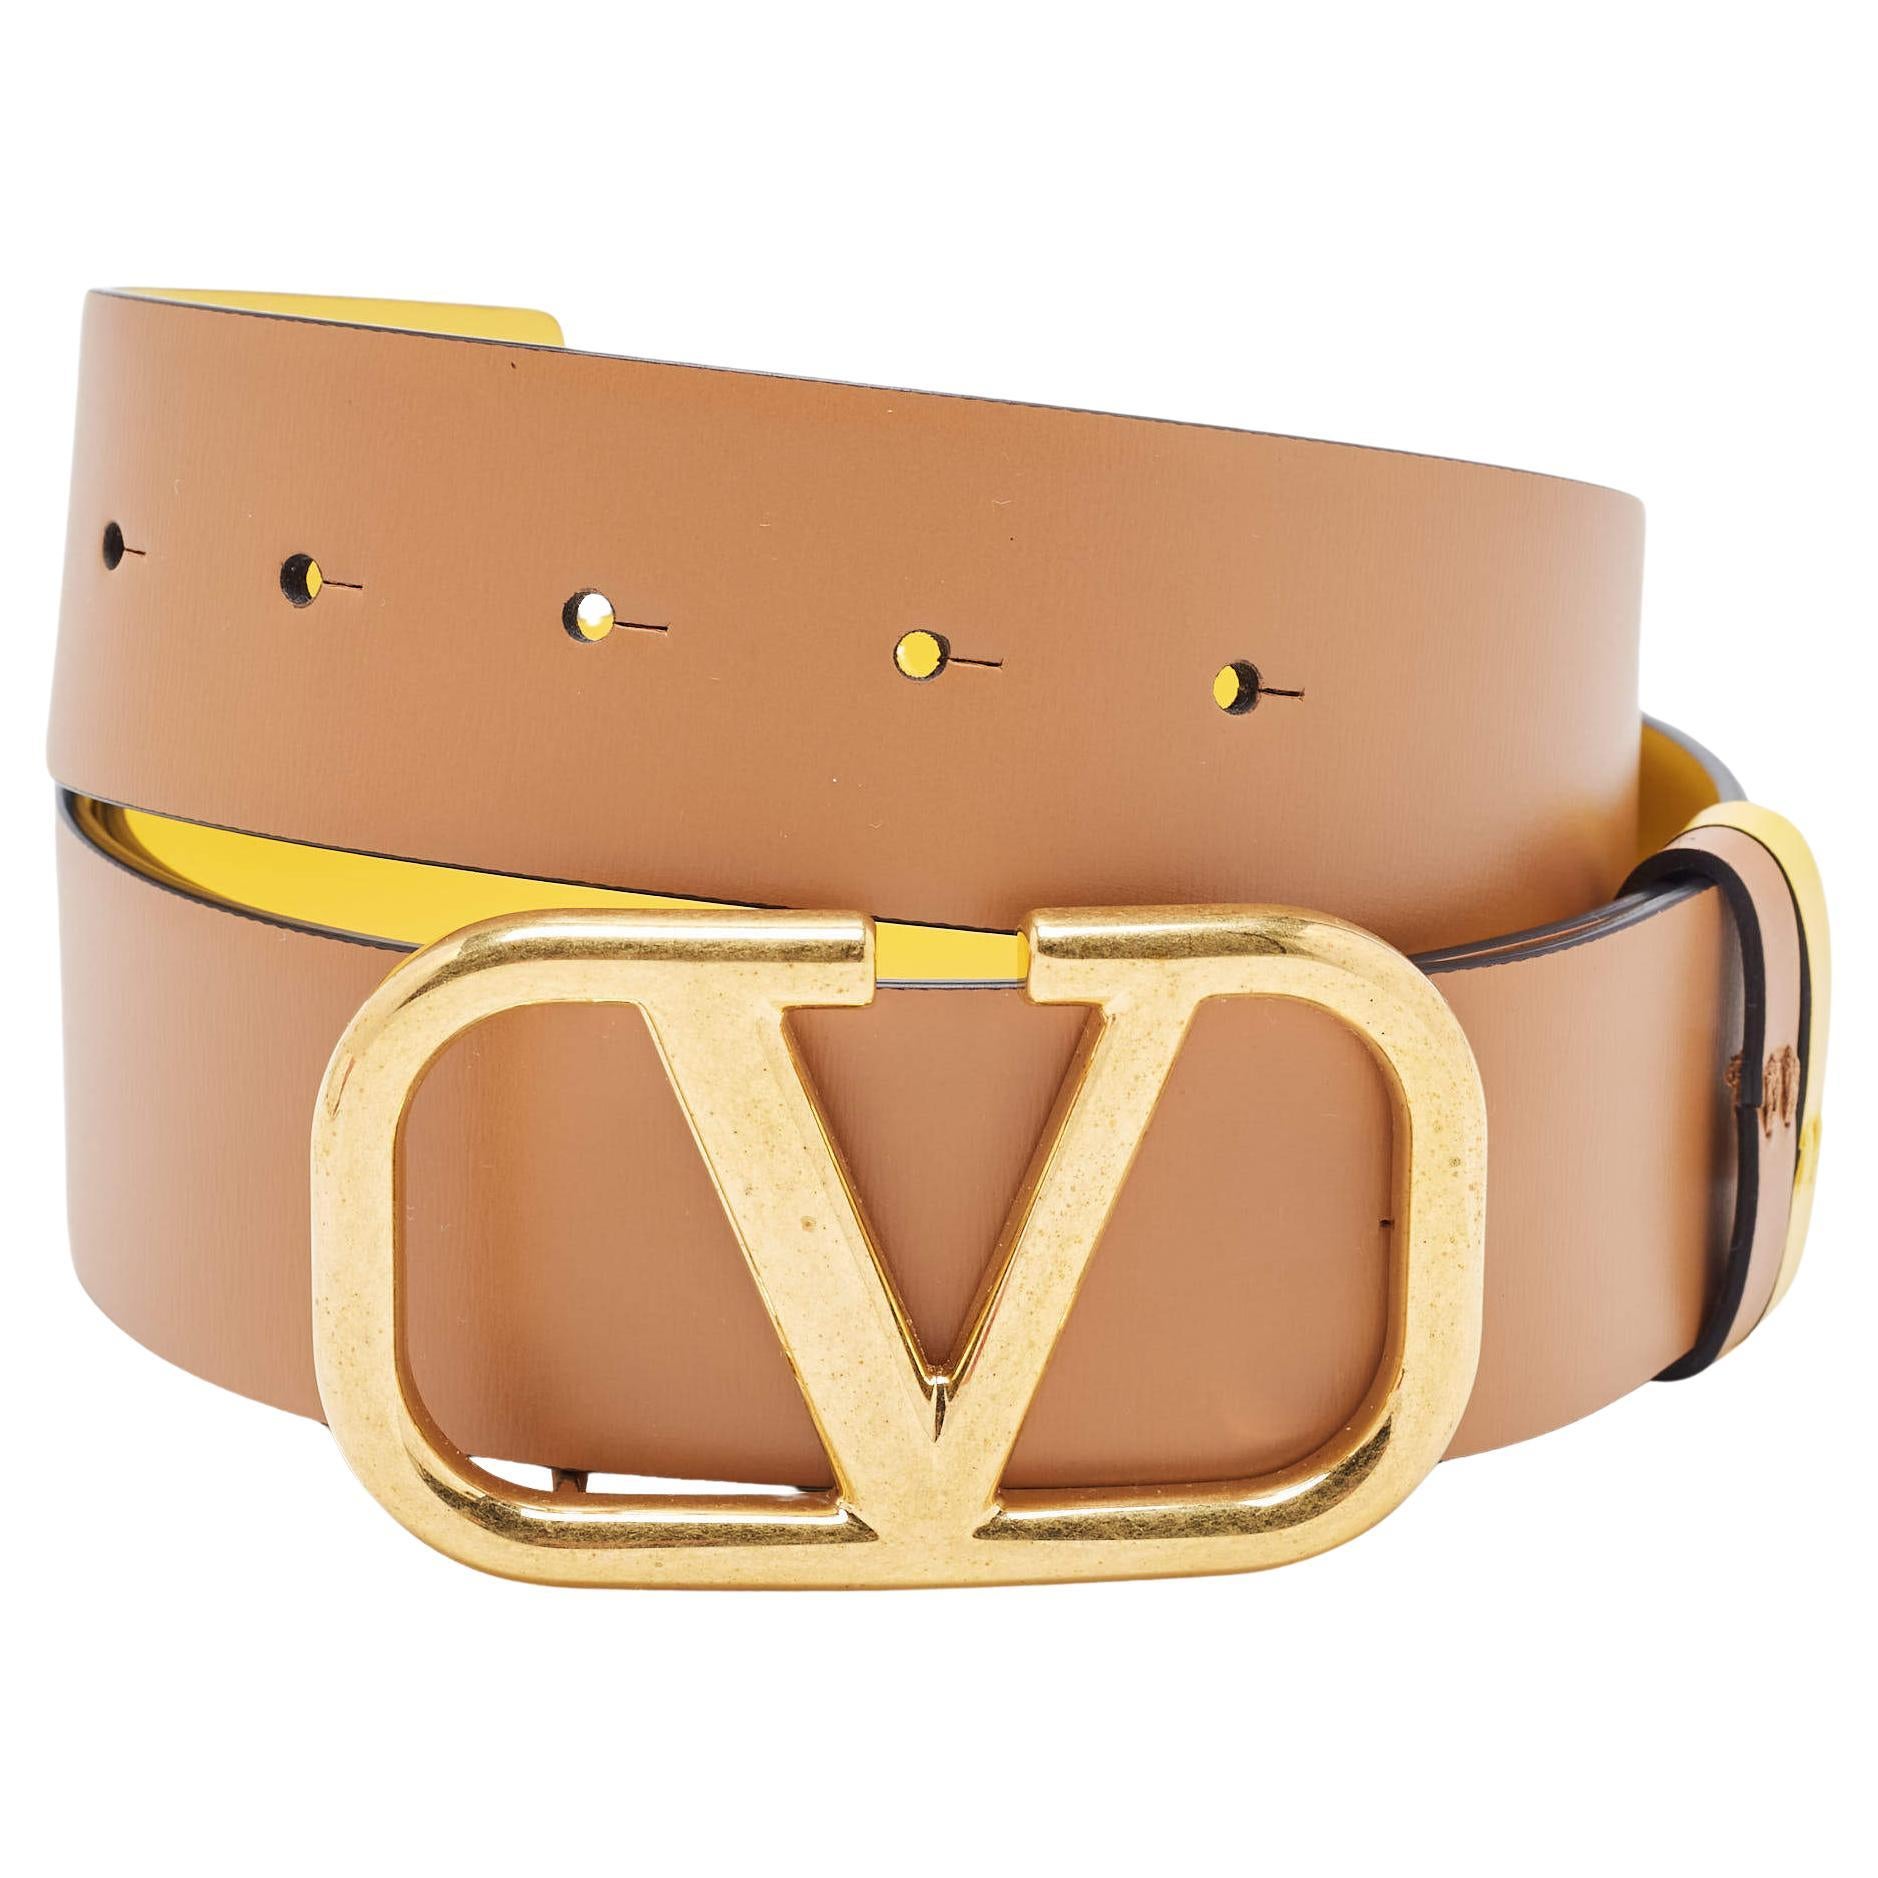 Valentino Yellow/Brown Leather VLogo Reversible Belt 90 CM